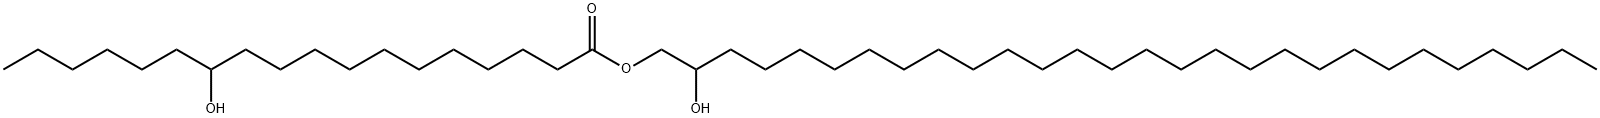 2-hydroxyoctacosyl 12-hydroxyoctadecanoate  Structure